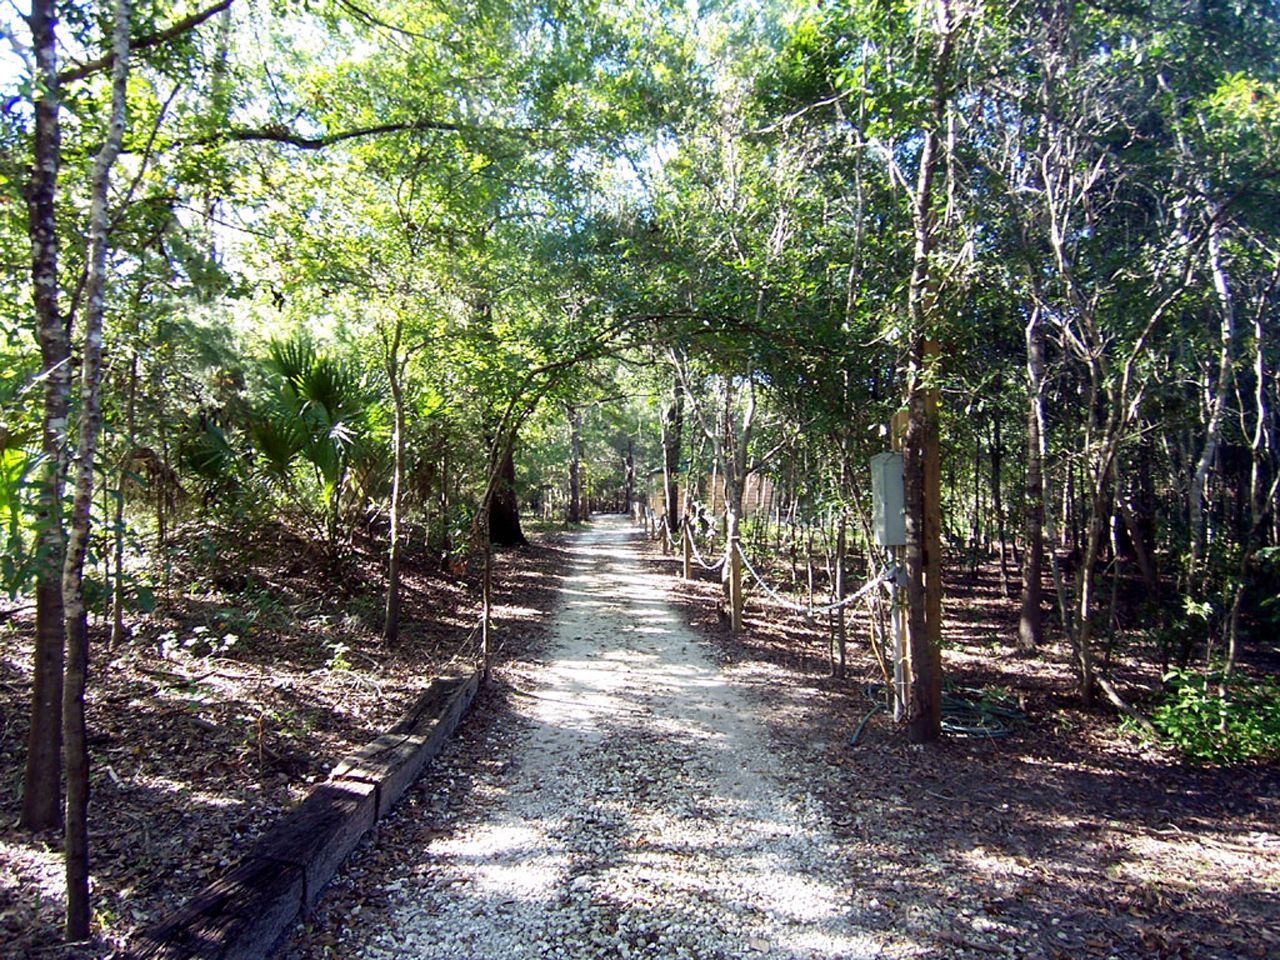 a dirt road going through a lush green forest .